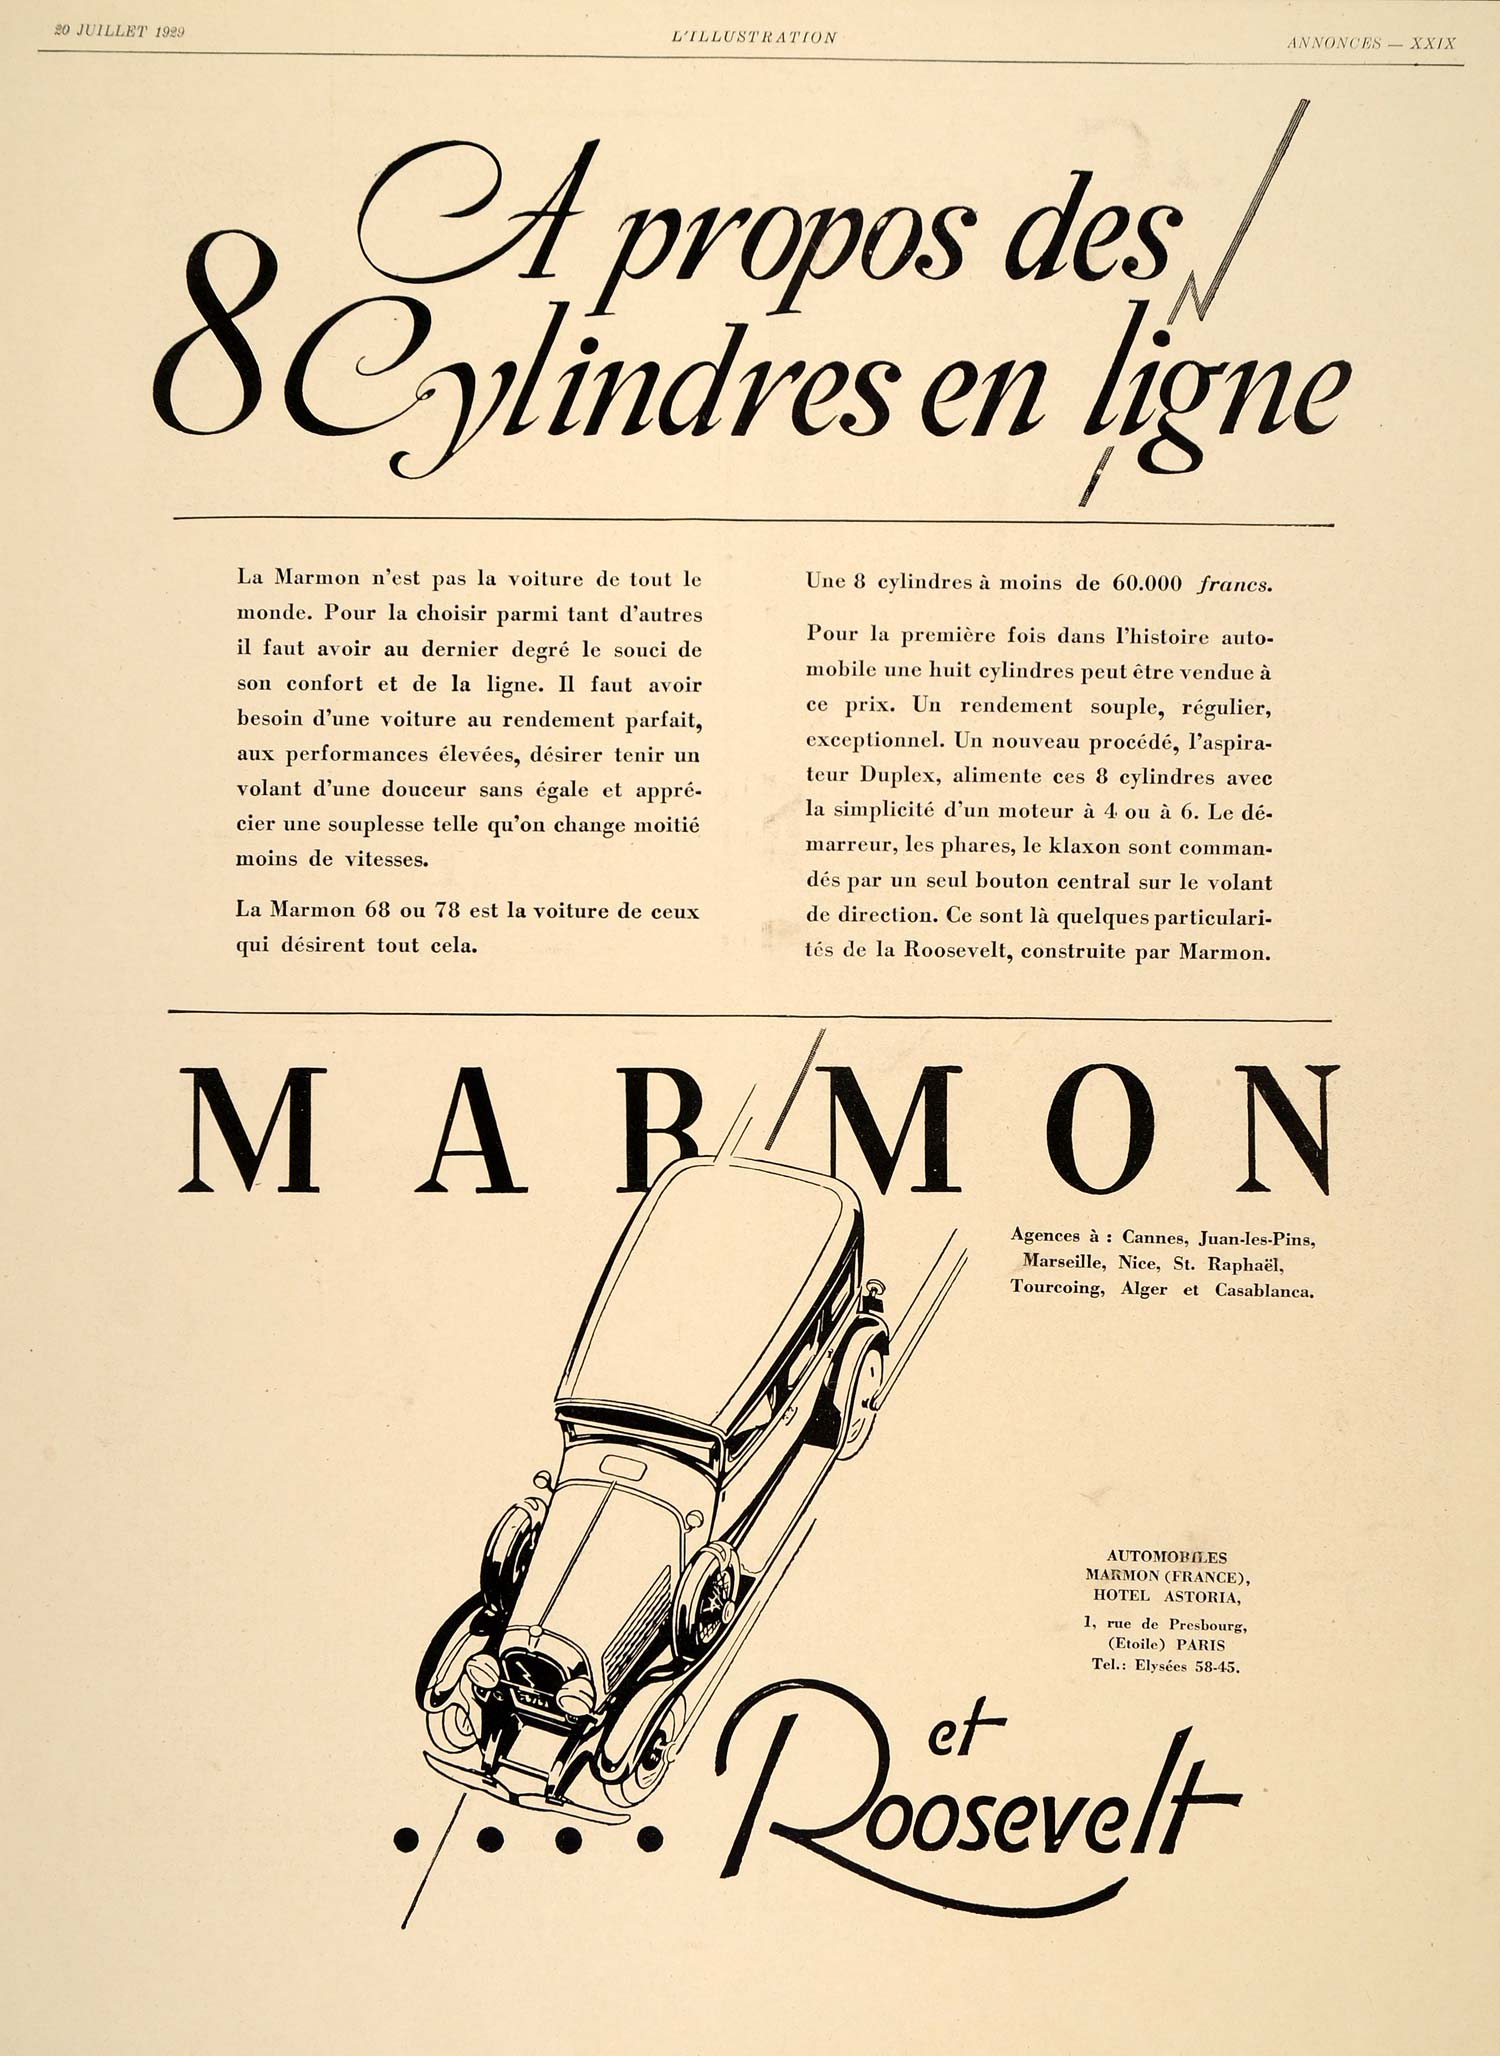 1929 Ad French Car Automobile Marmon Roosevelt Astoria - ORIGINAL ILL3